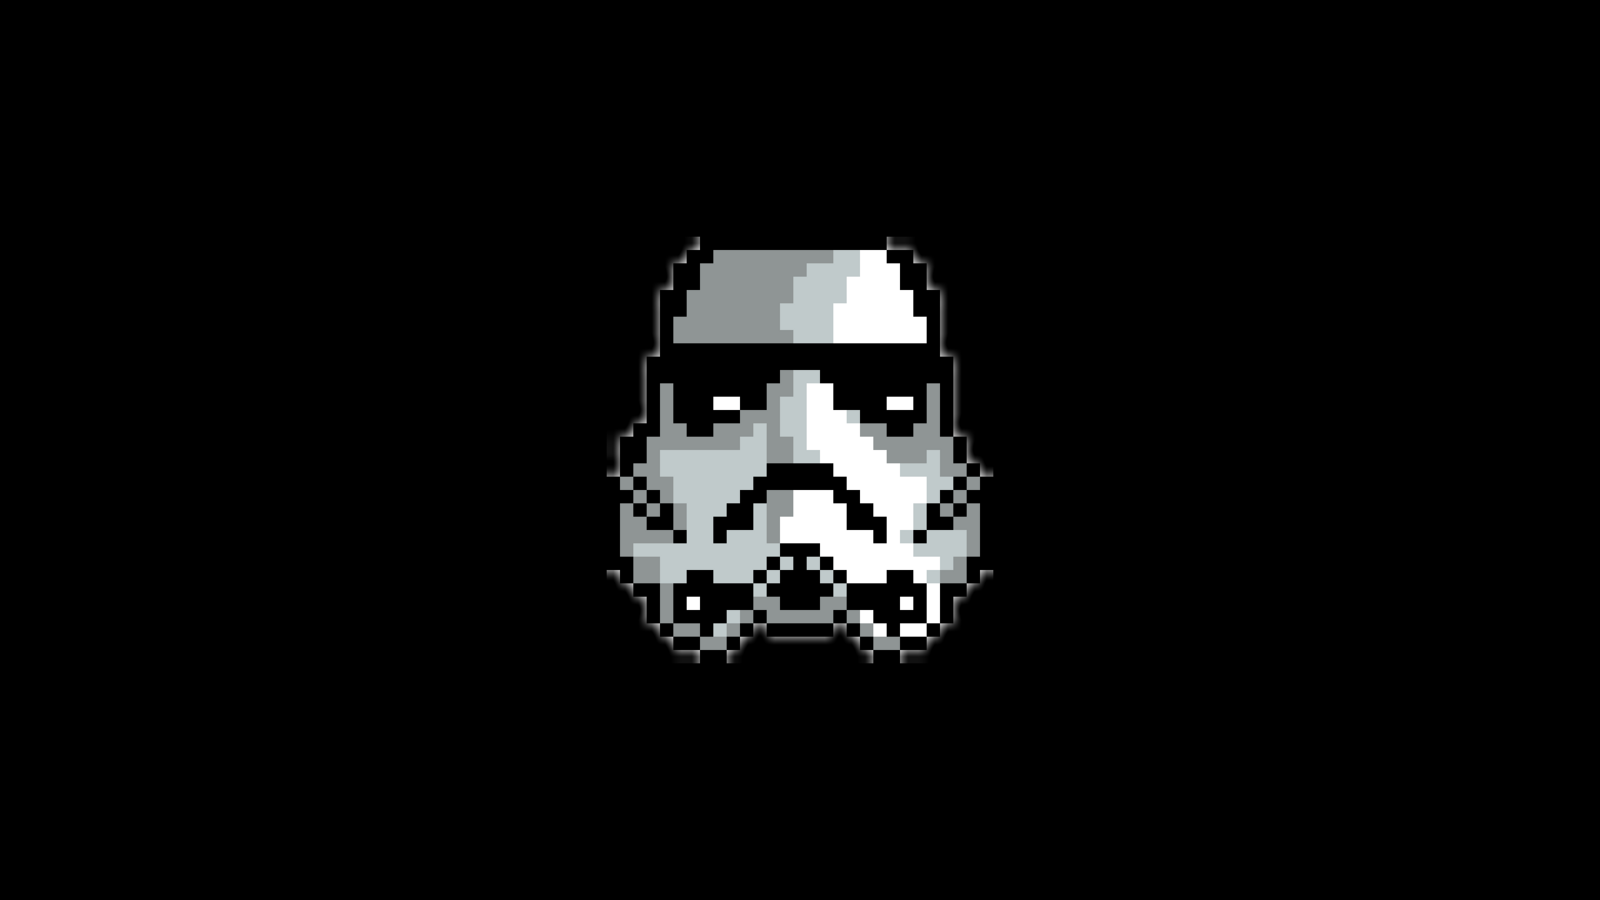 Wallpapers Star Wars pixel art logo on the desktop